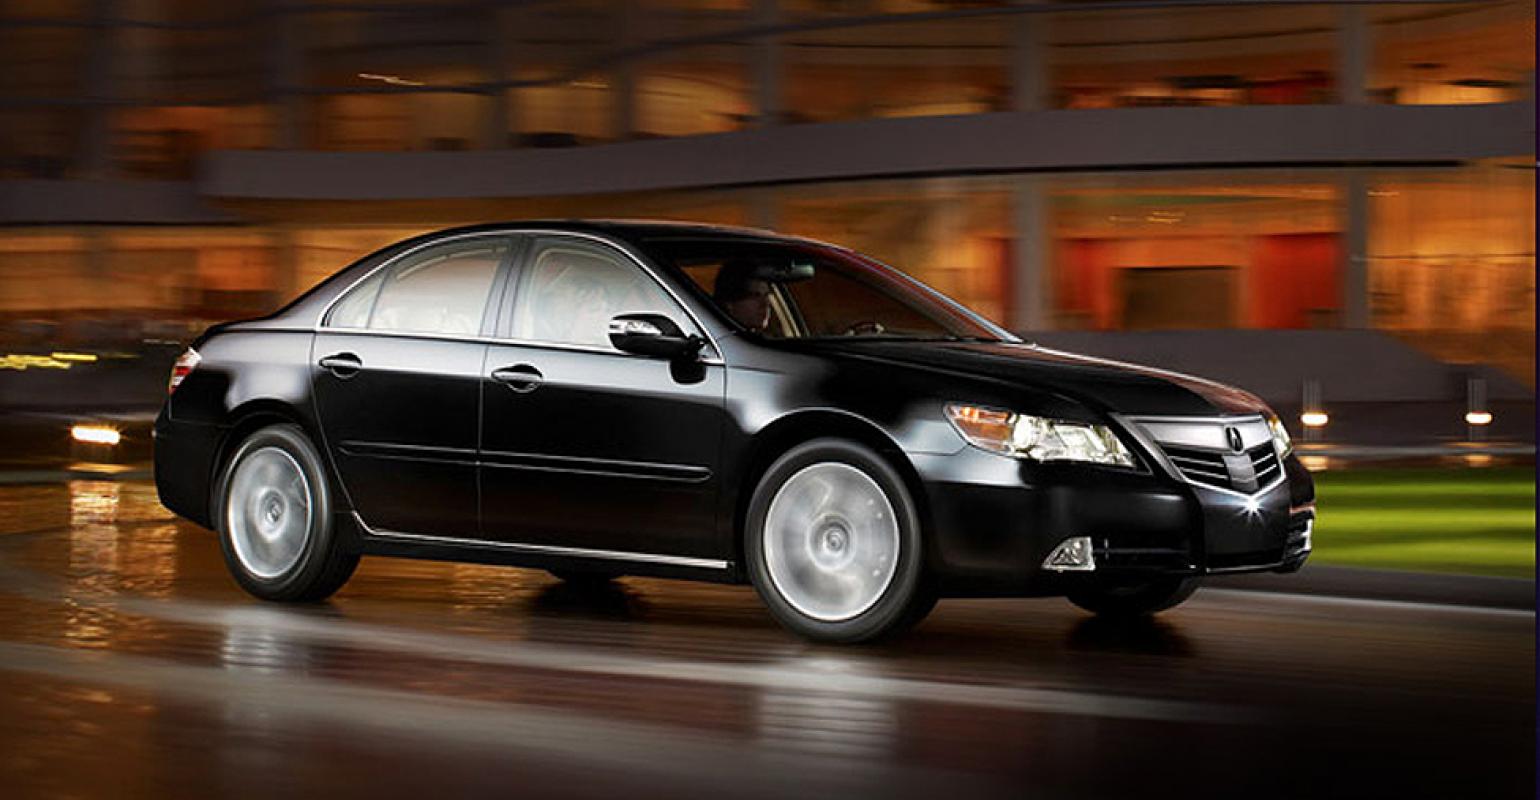 Acura To Detail New Models In New York Honda Incentives May Fall